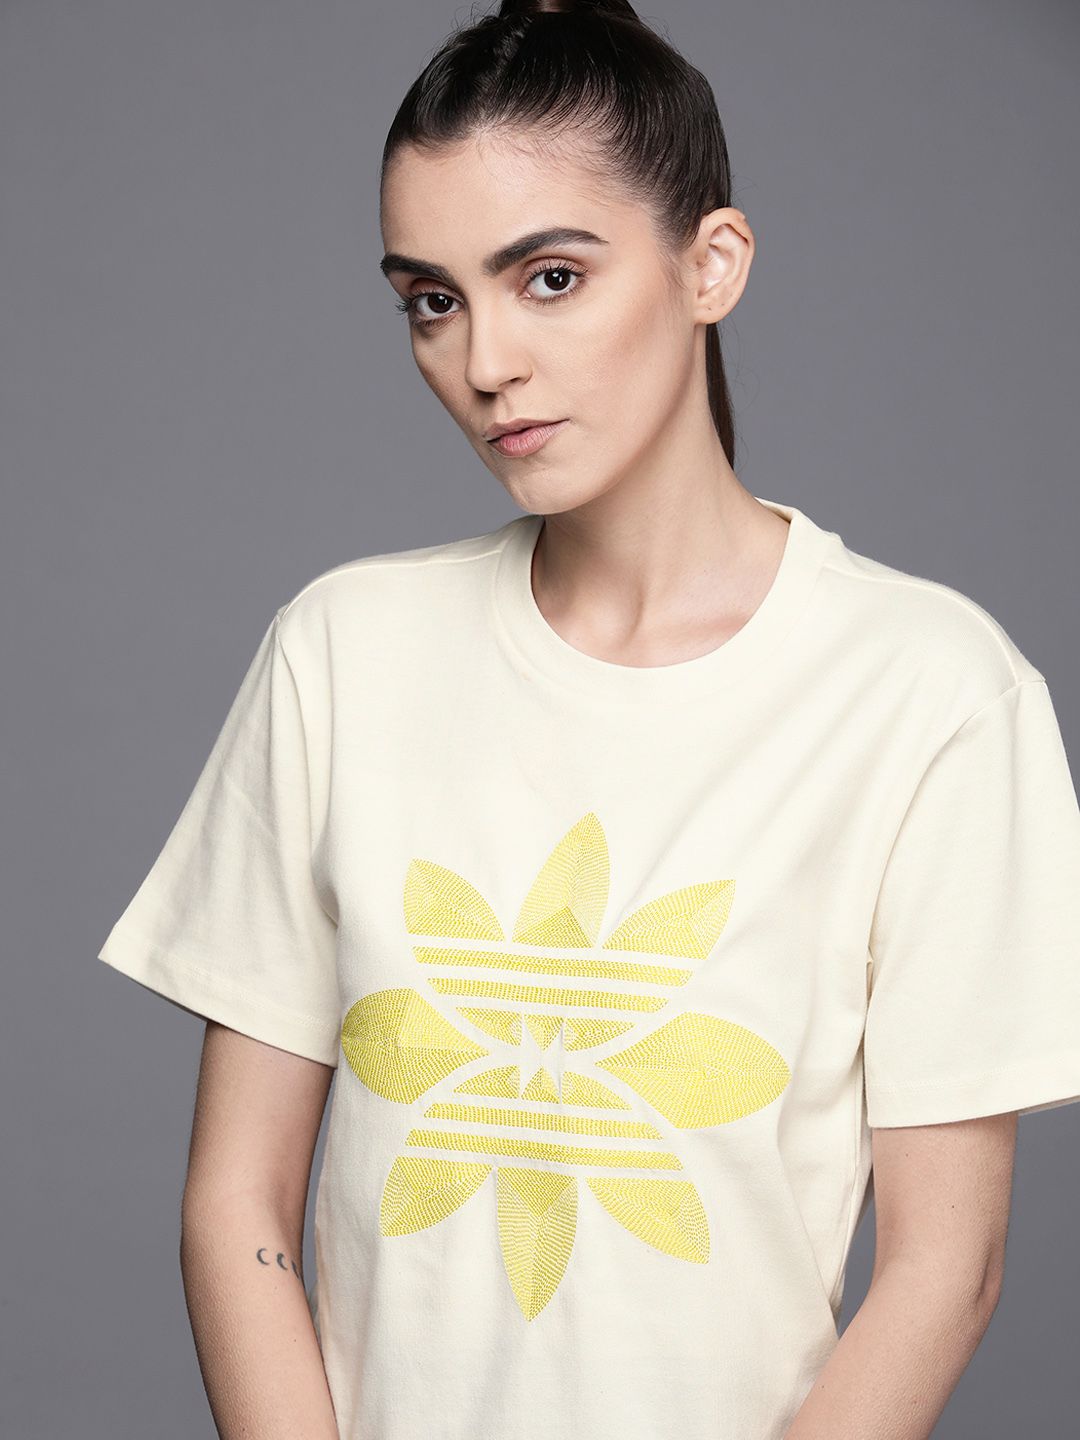 ADIDAS Originals Women Off-White & Yellow Brand logo Graphic Pure Cotton T-Shirt Price in India